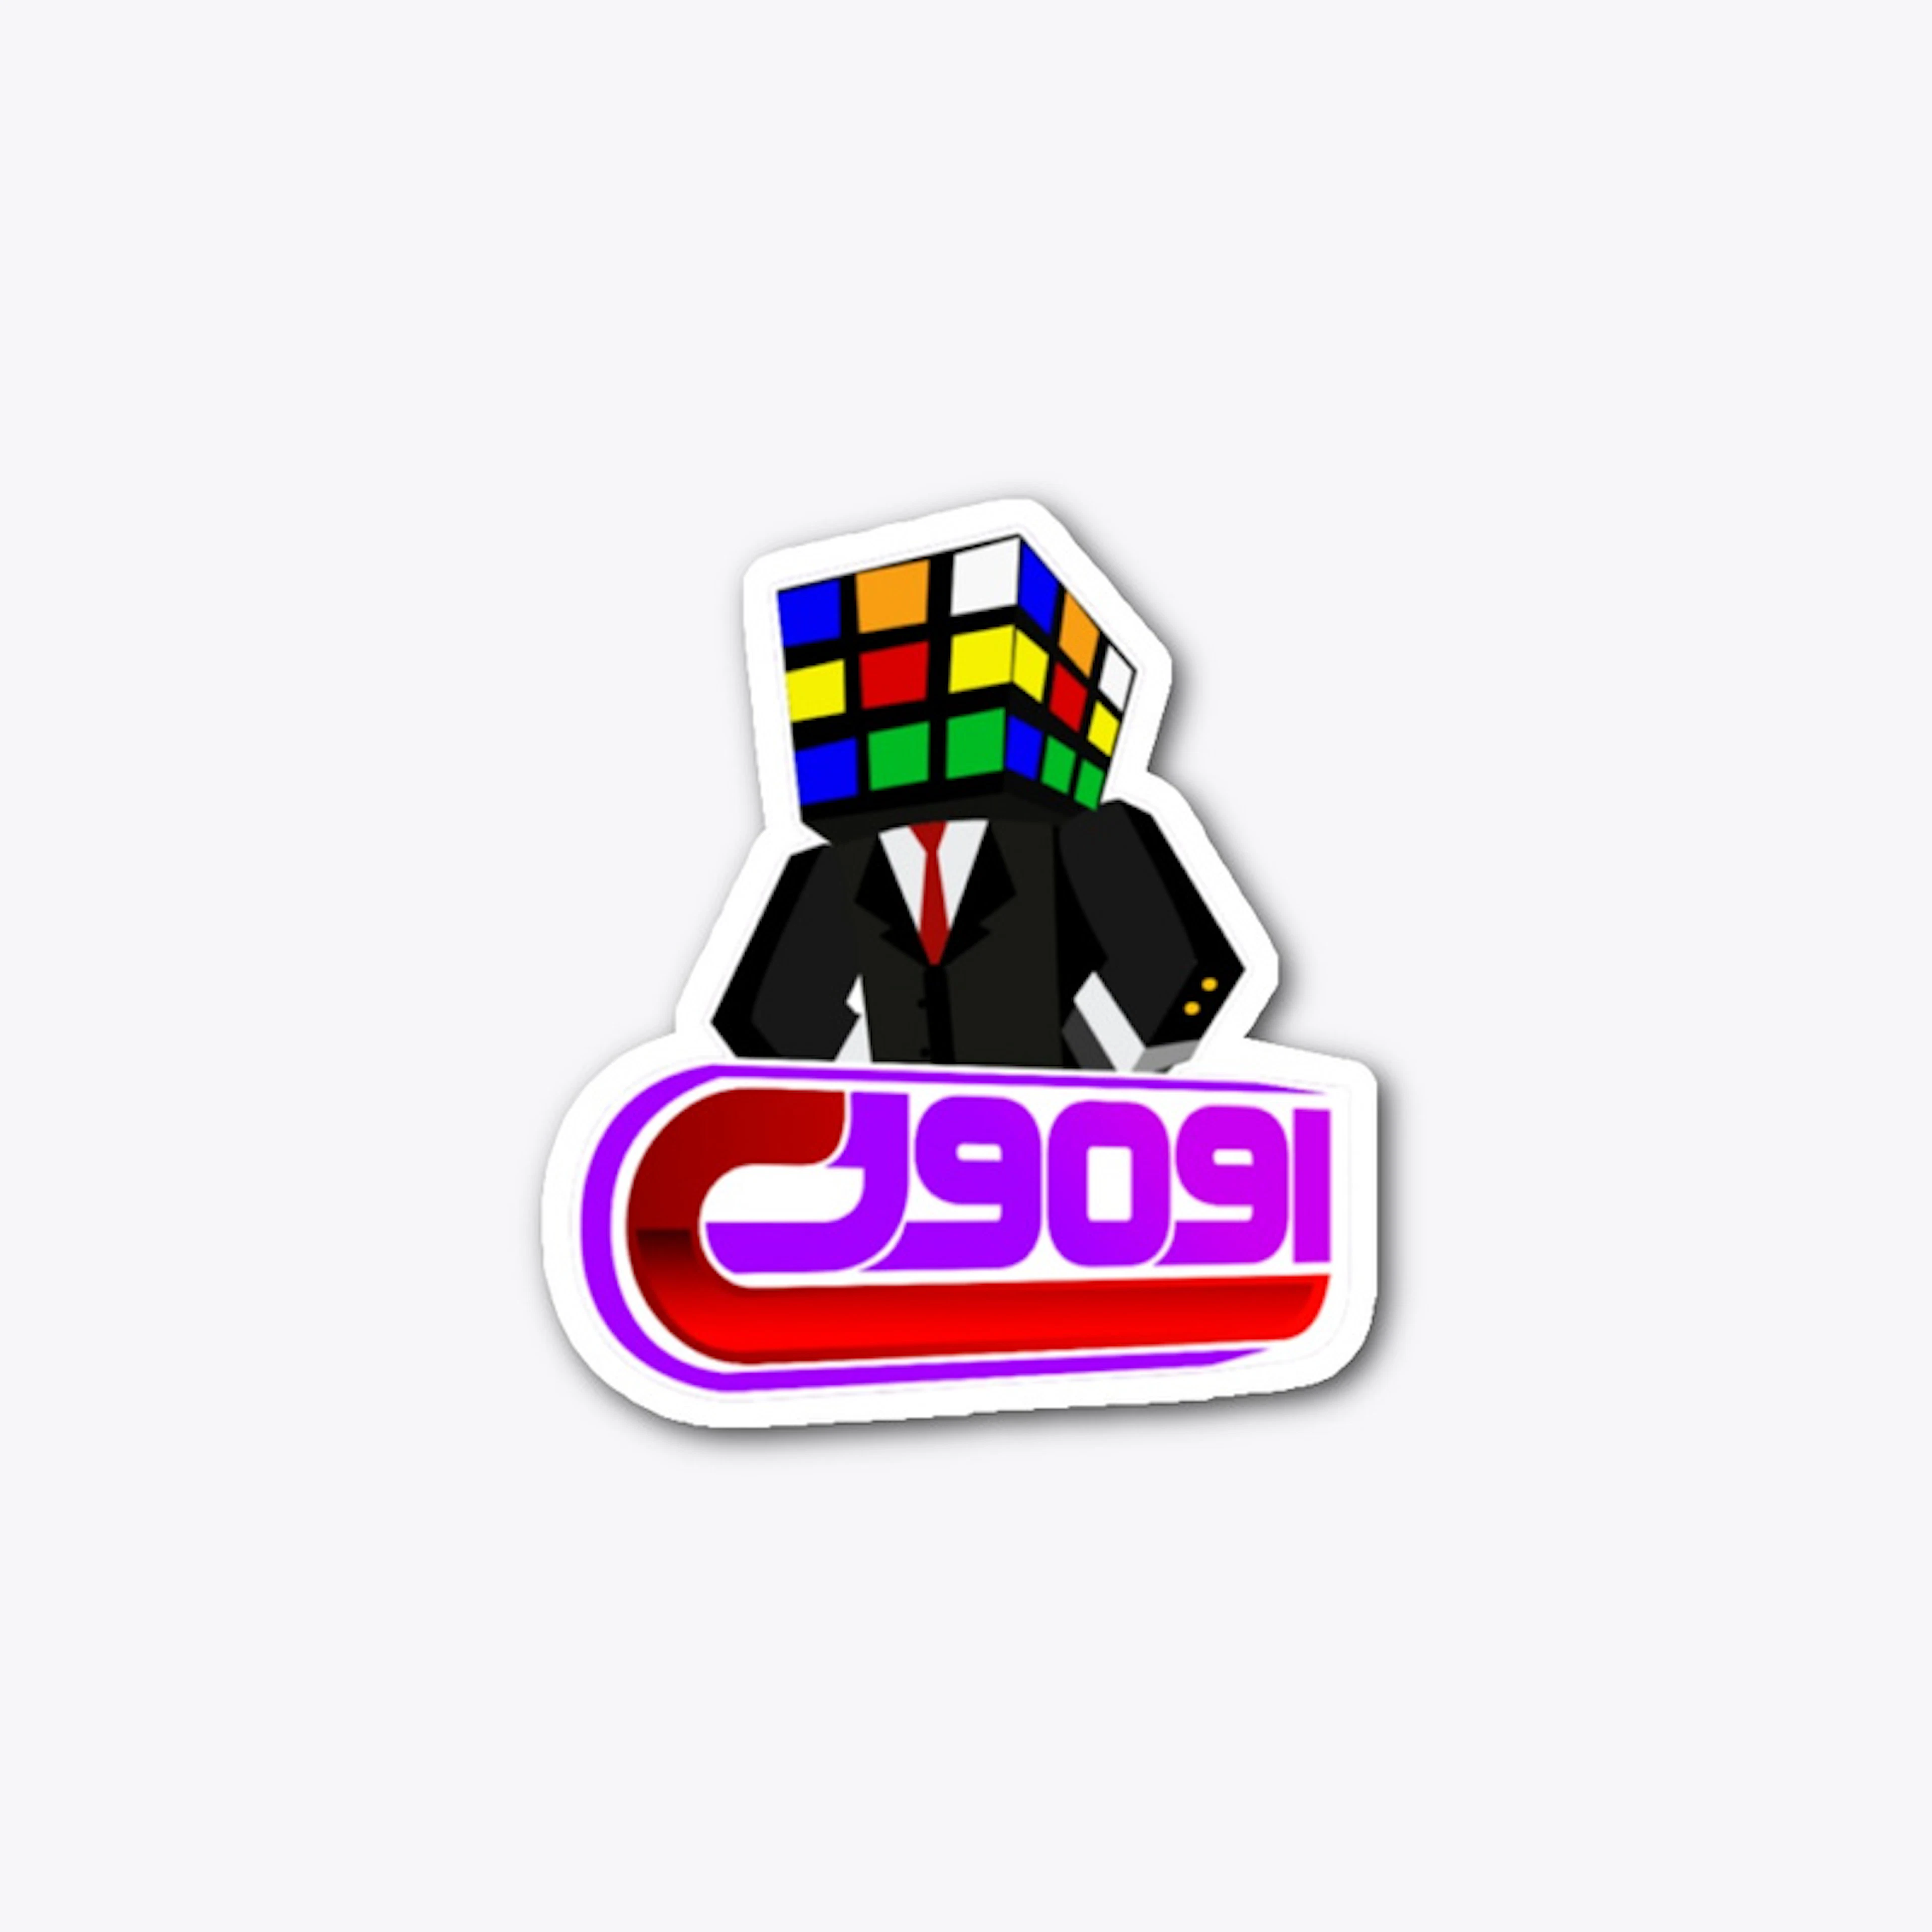 CJ9091 Logo